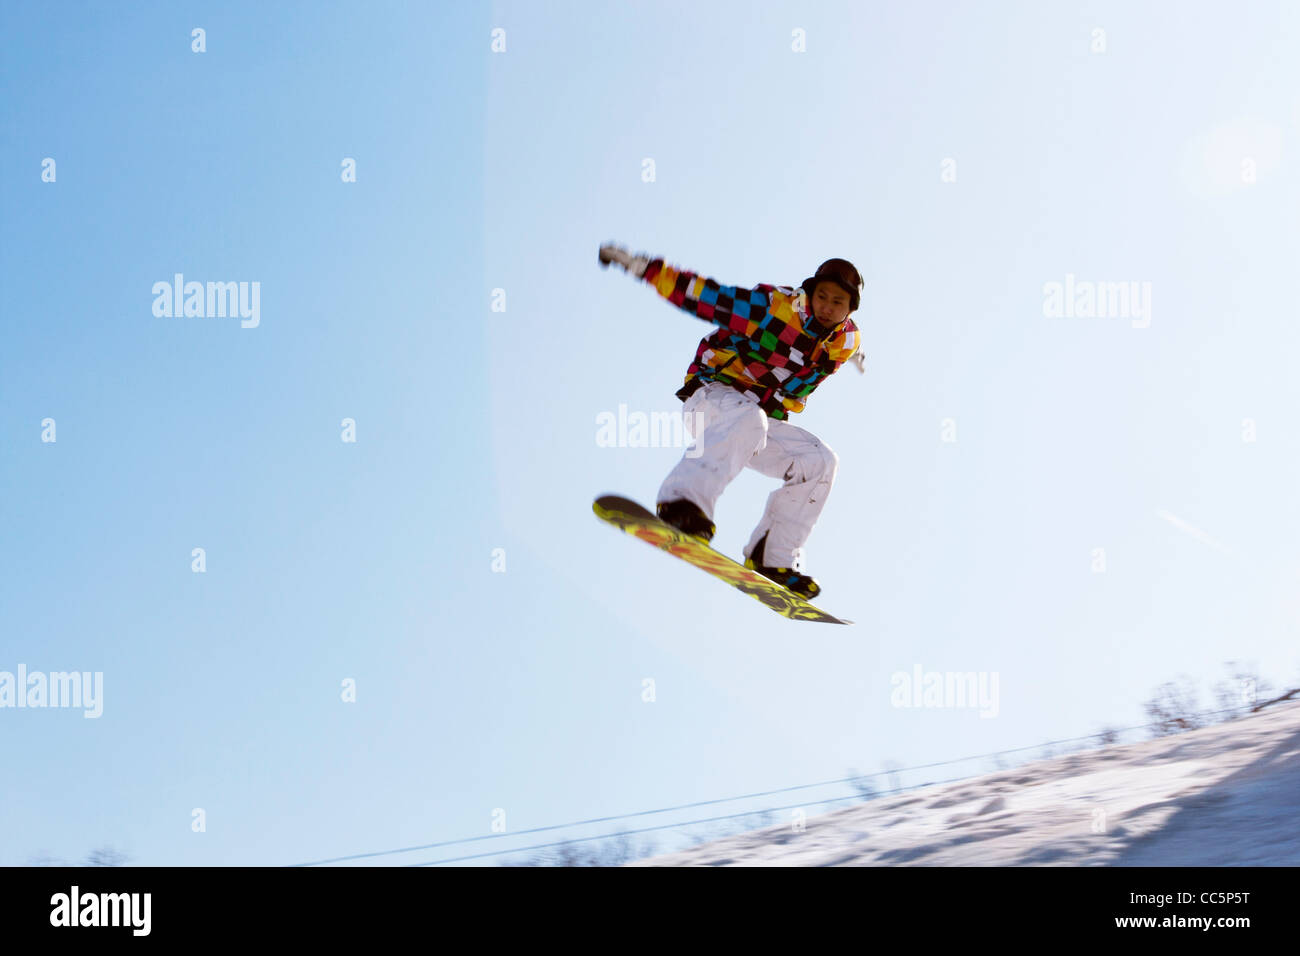 Young man on skateboard in mid-air, Lianhua Mountain Ski Resort, Changchun, Jilin , China Stock Photo